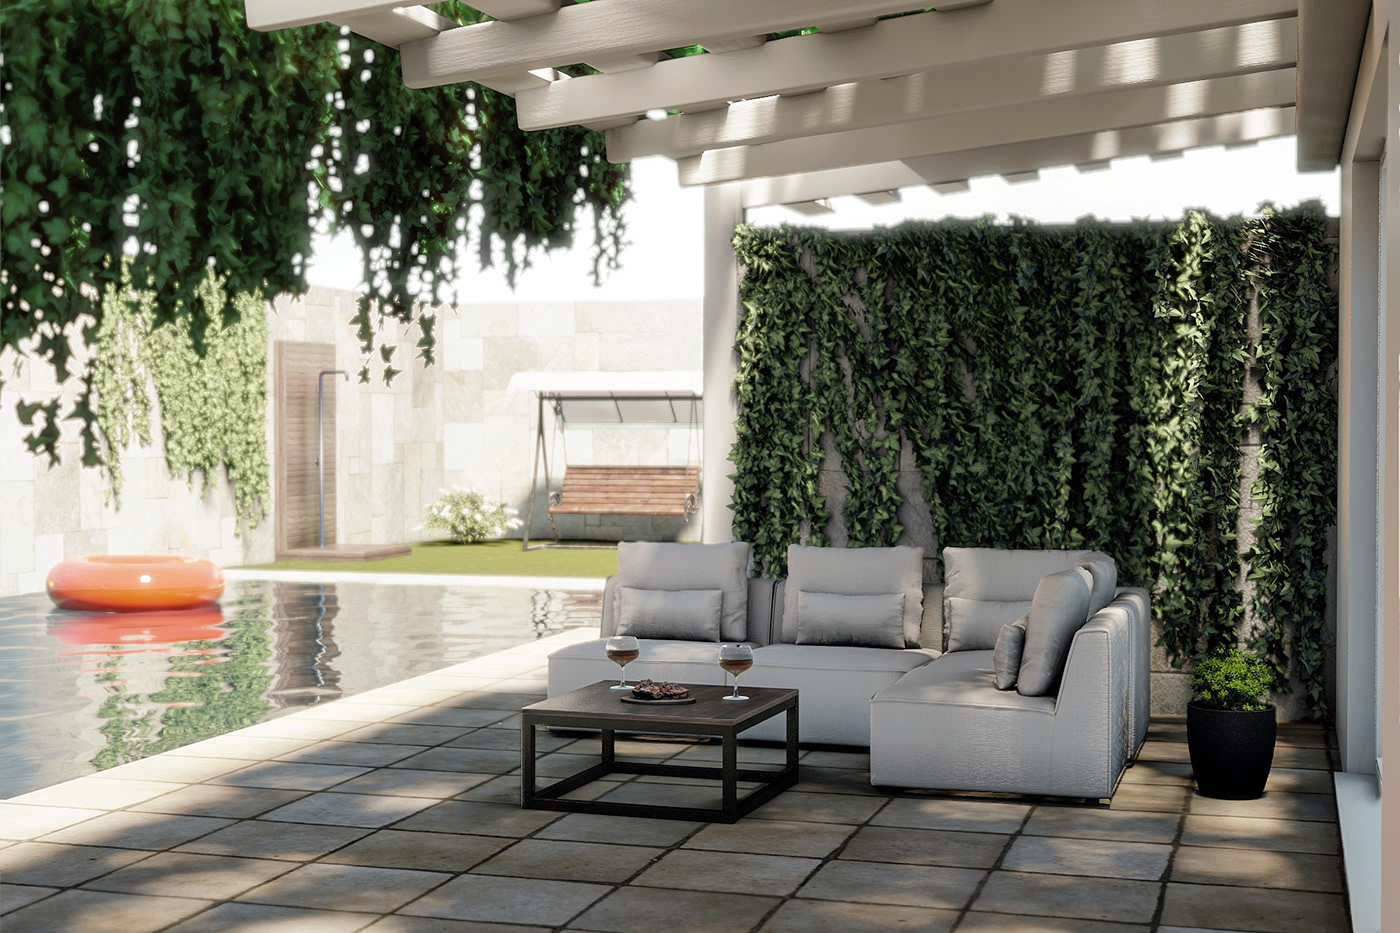 terrace outdoors exterior garden blender lighting realistic Pool